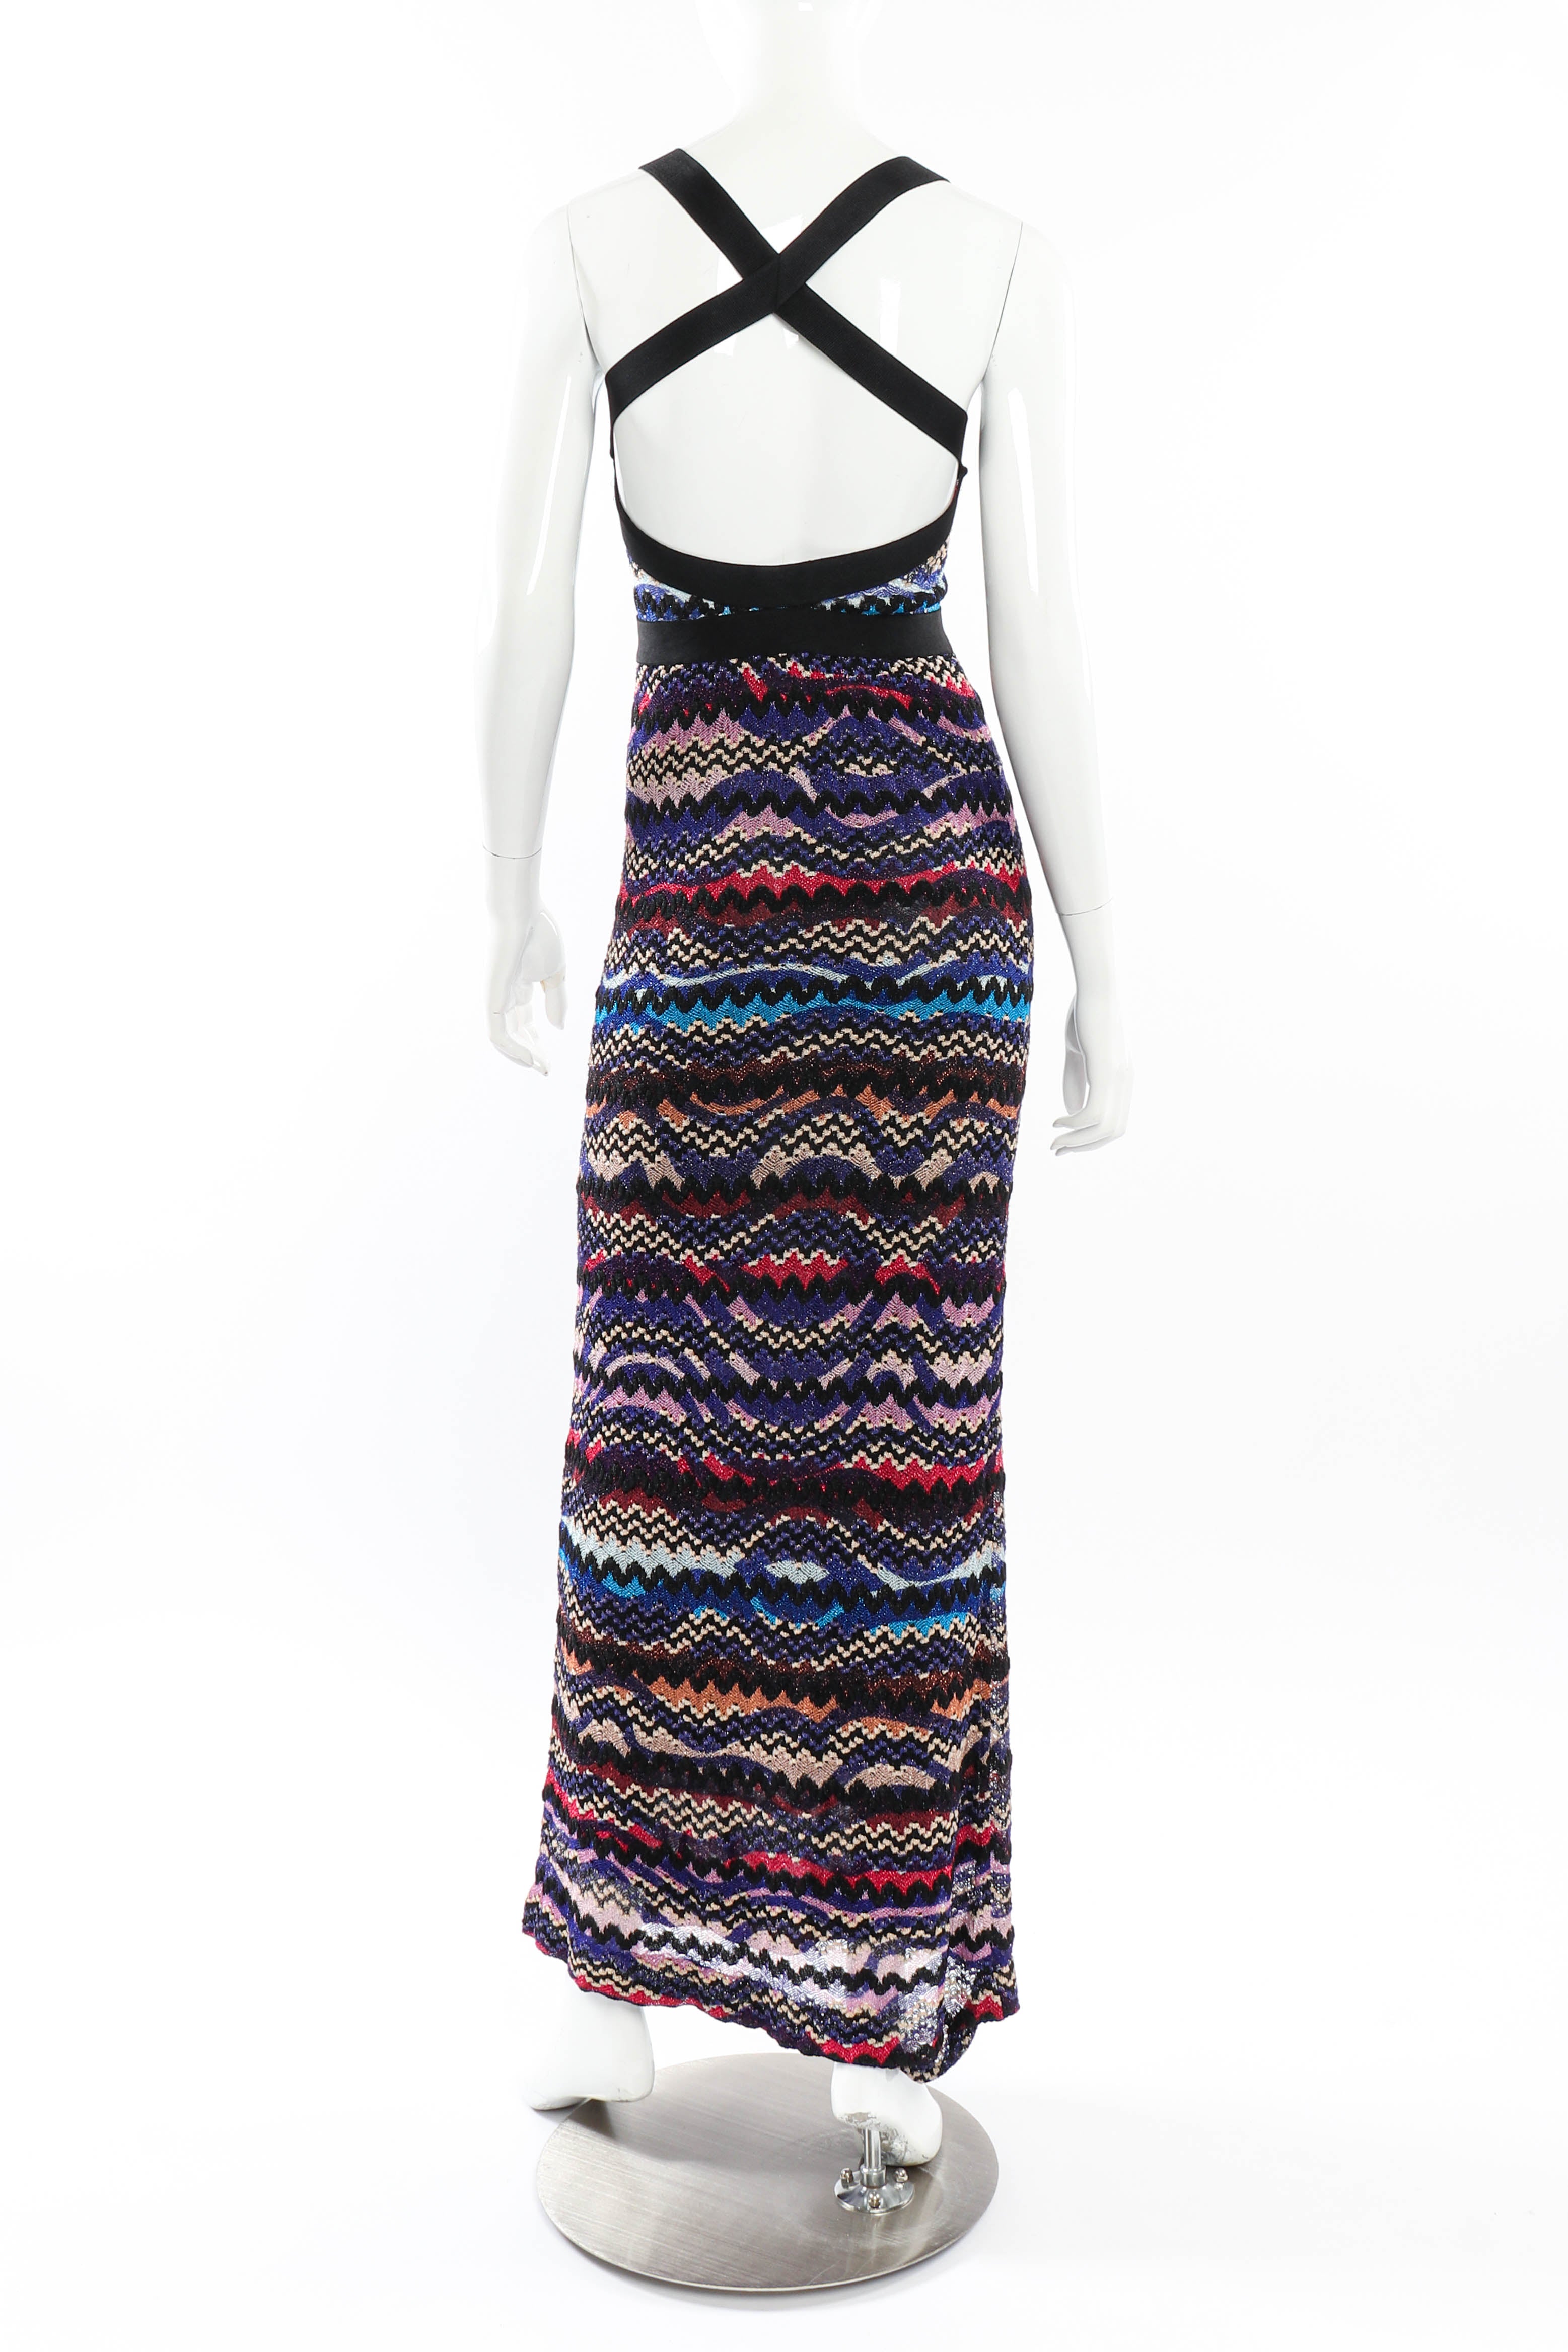 Missoni Chevron Knit Maxi Dress back on mannequin @recessla